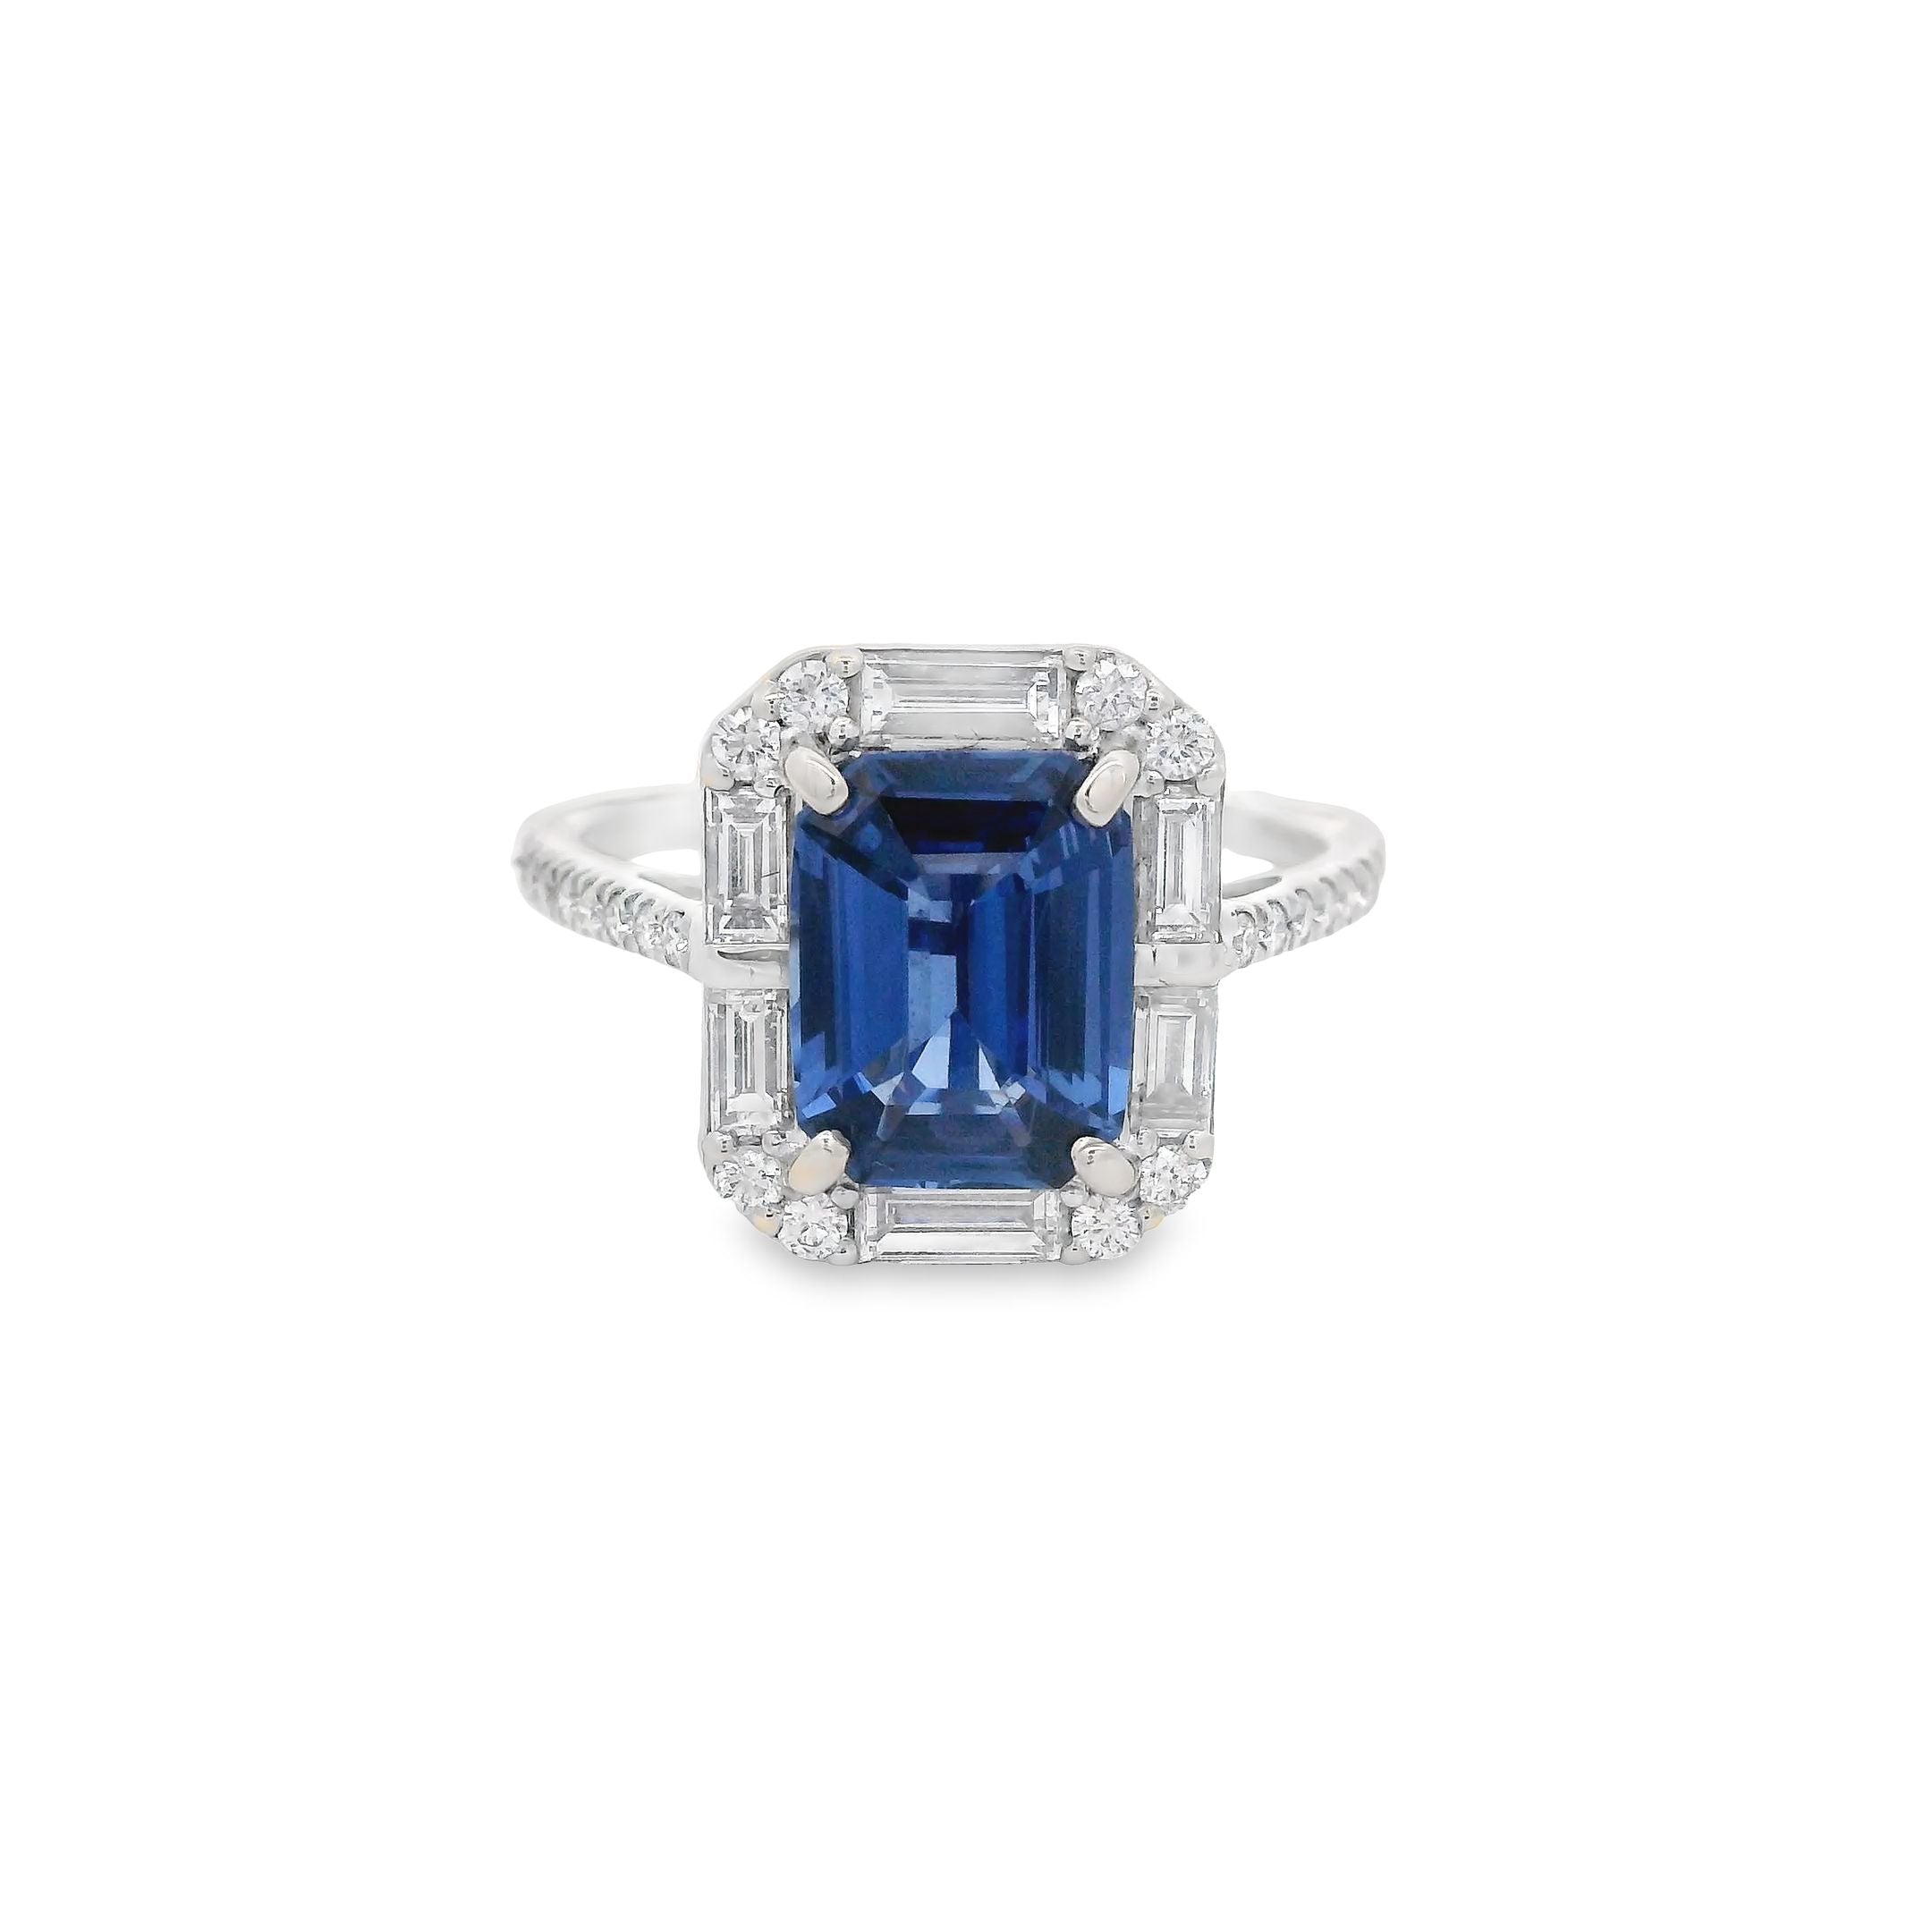 Halo Emerald Cut Sapphire and Diamond Ring 18KW